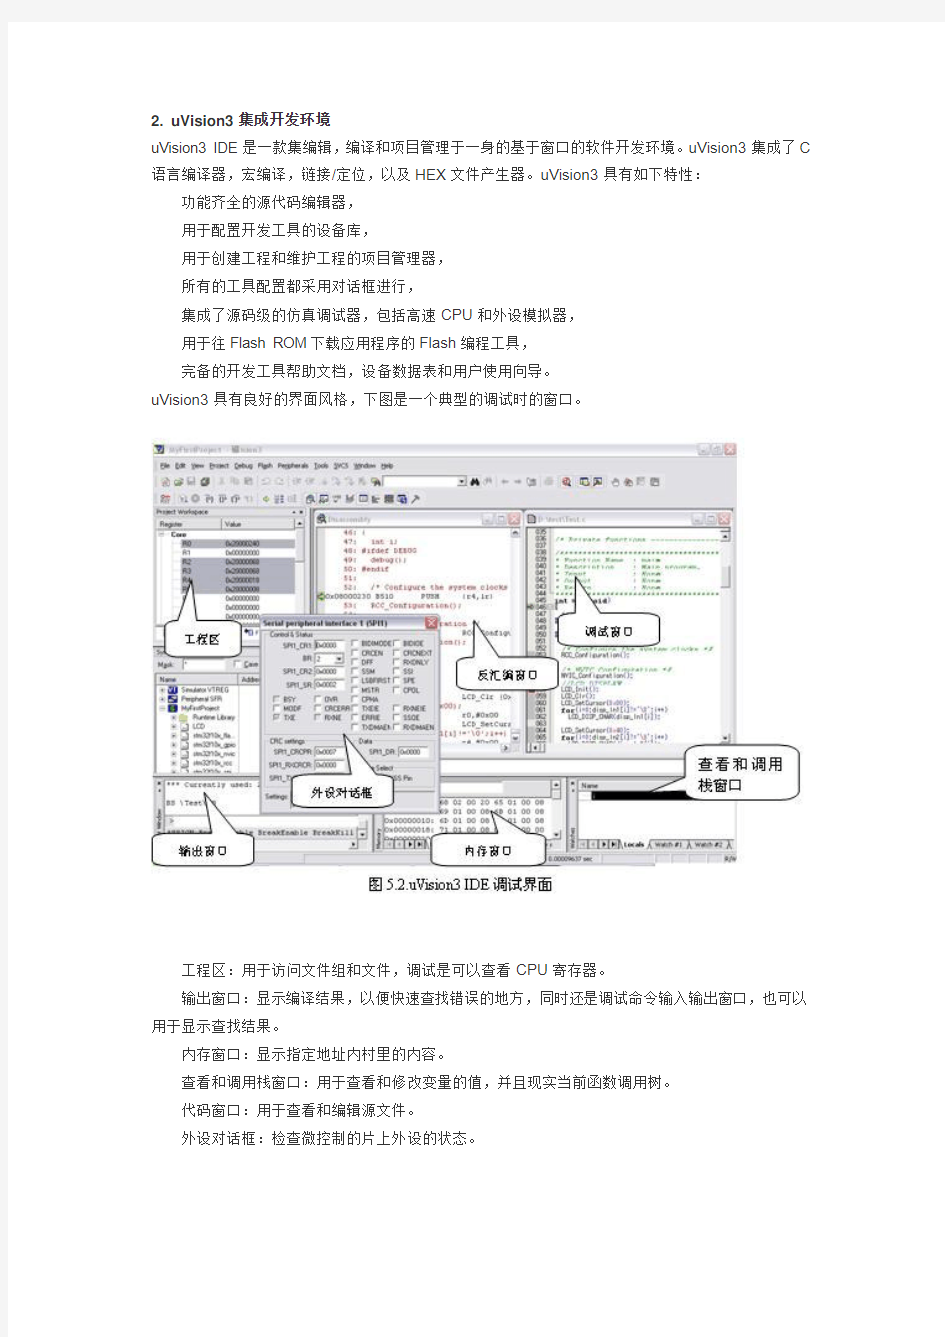 STM32开发环境(工具)之Keil MDK 介绍